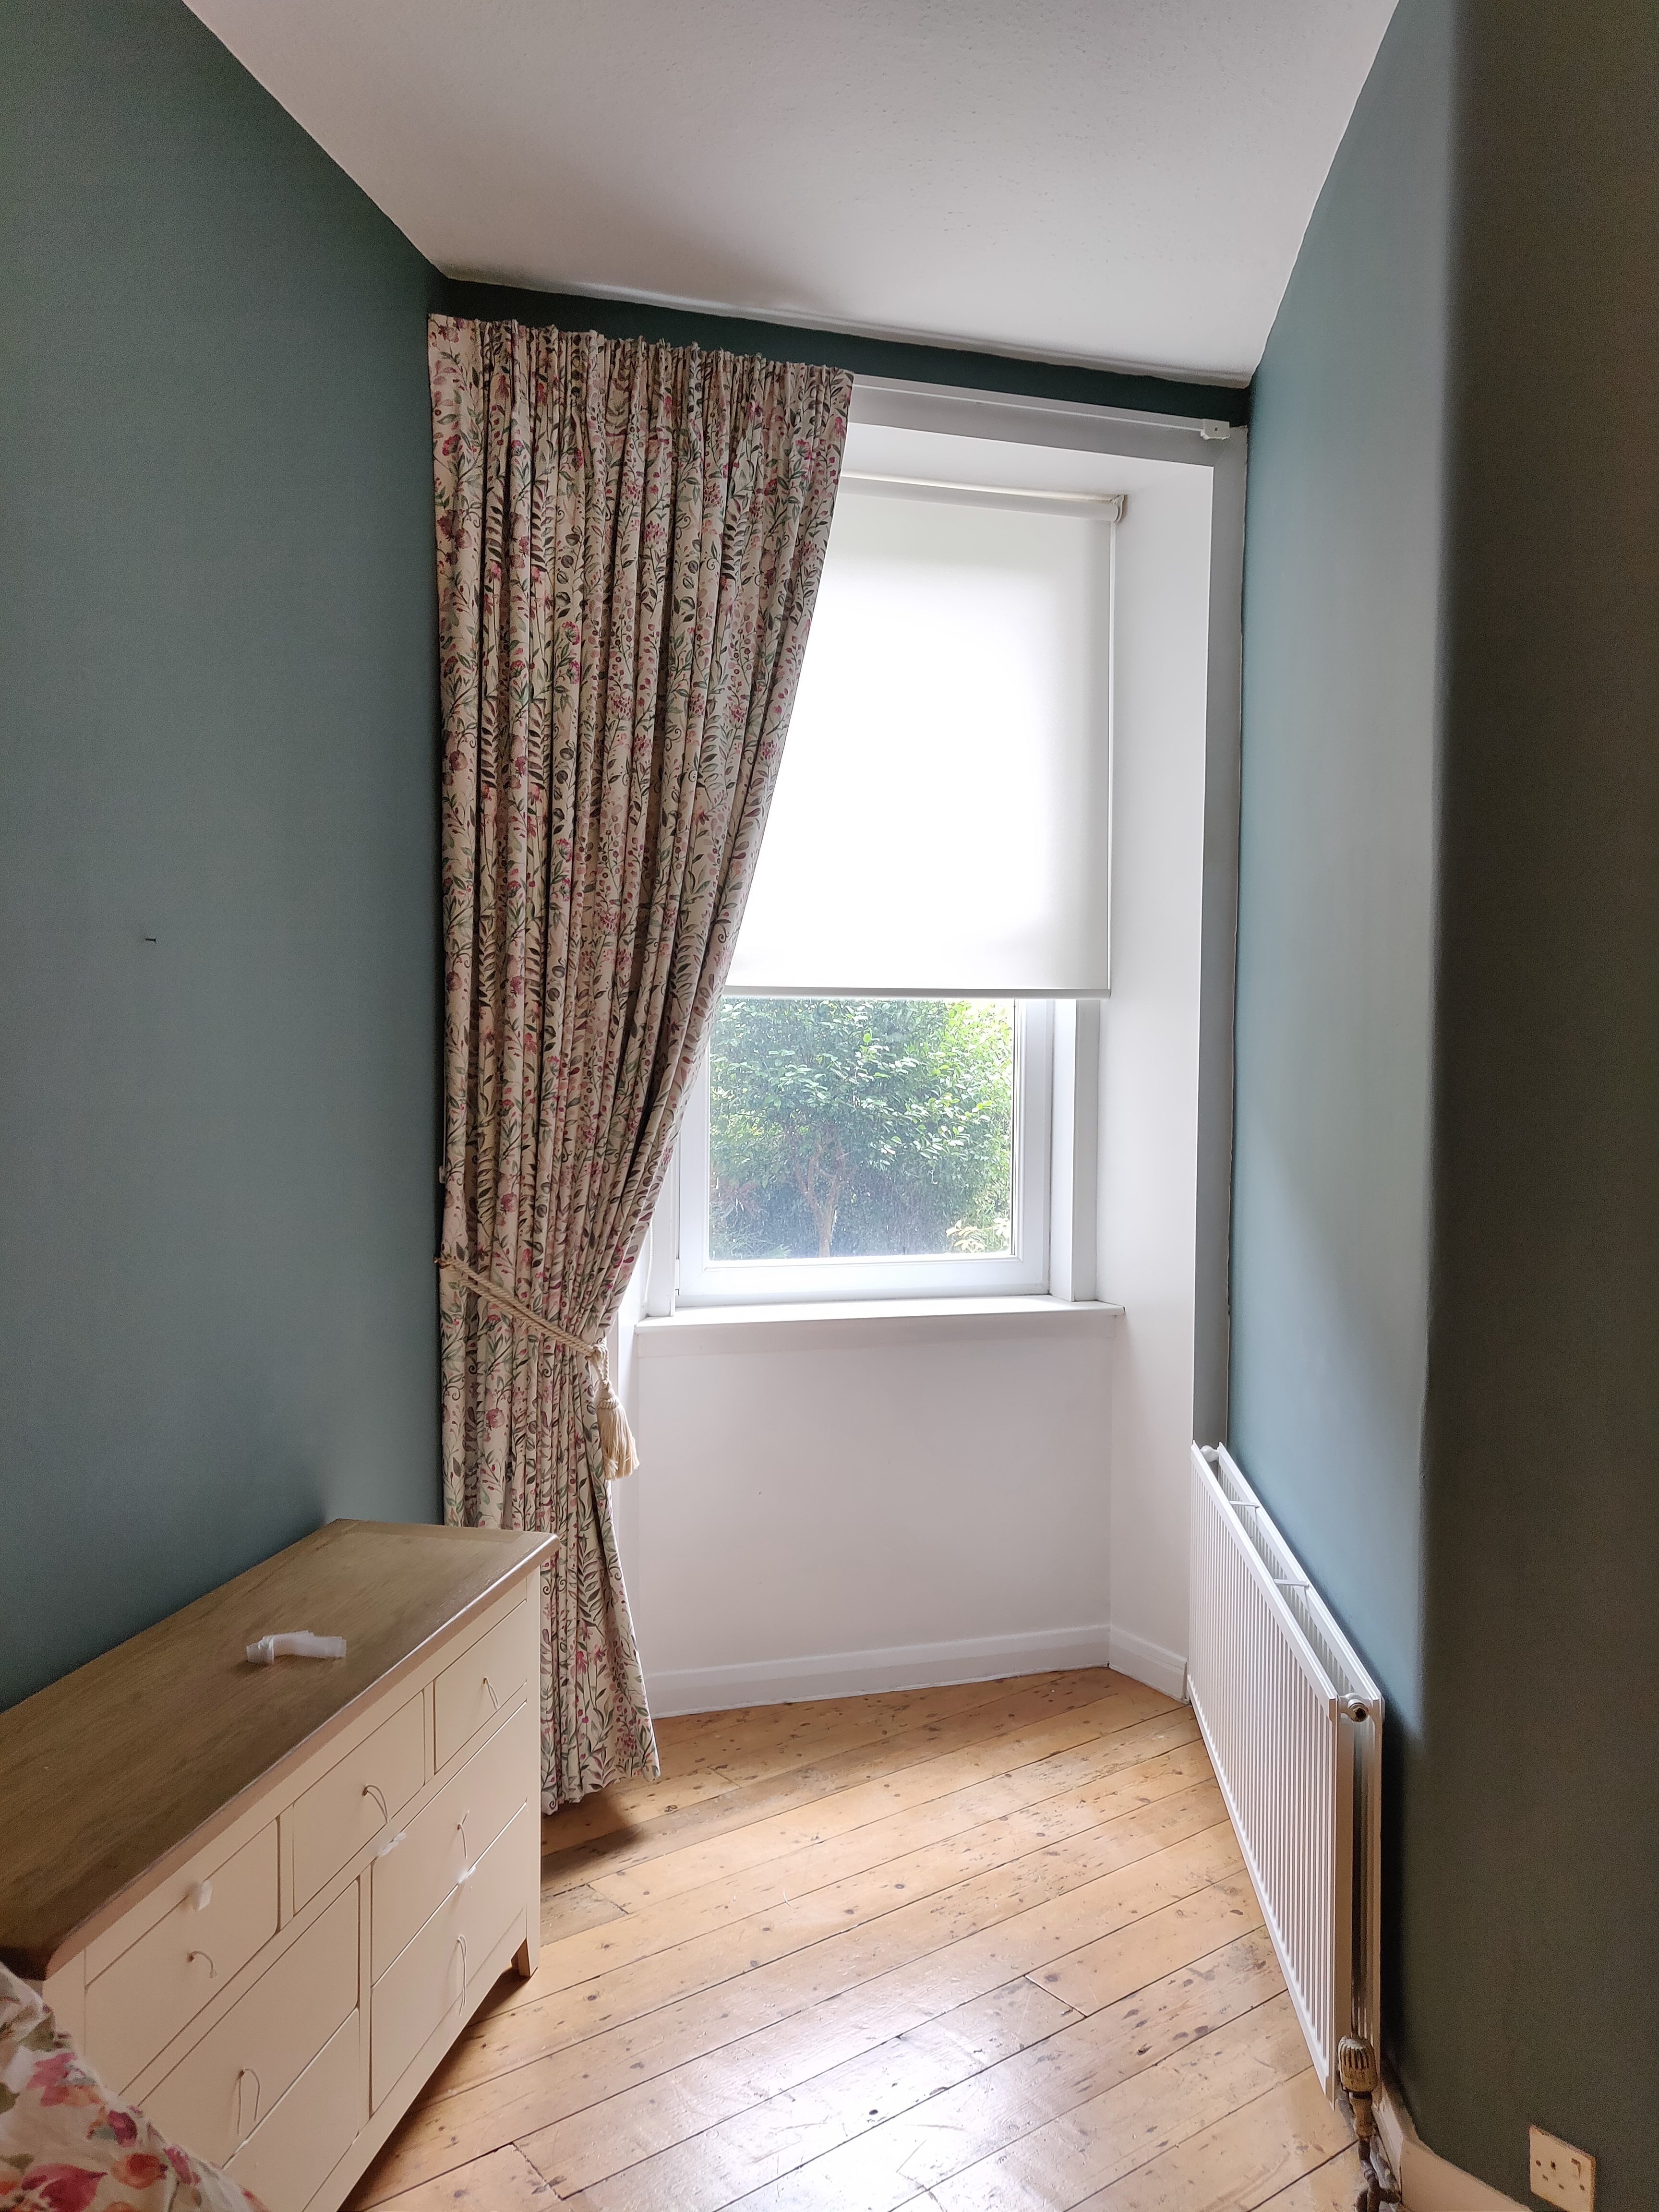 Corner Bedroom Window For Single Curtain In Viewforth Edinburgh Ines Interiors Because It S Your Home,Ikea California King Platform Bed